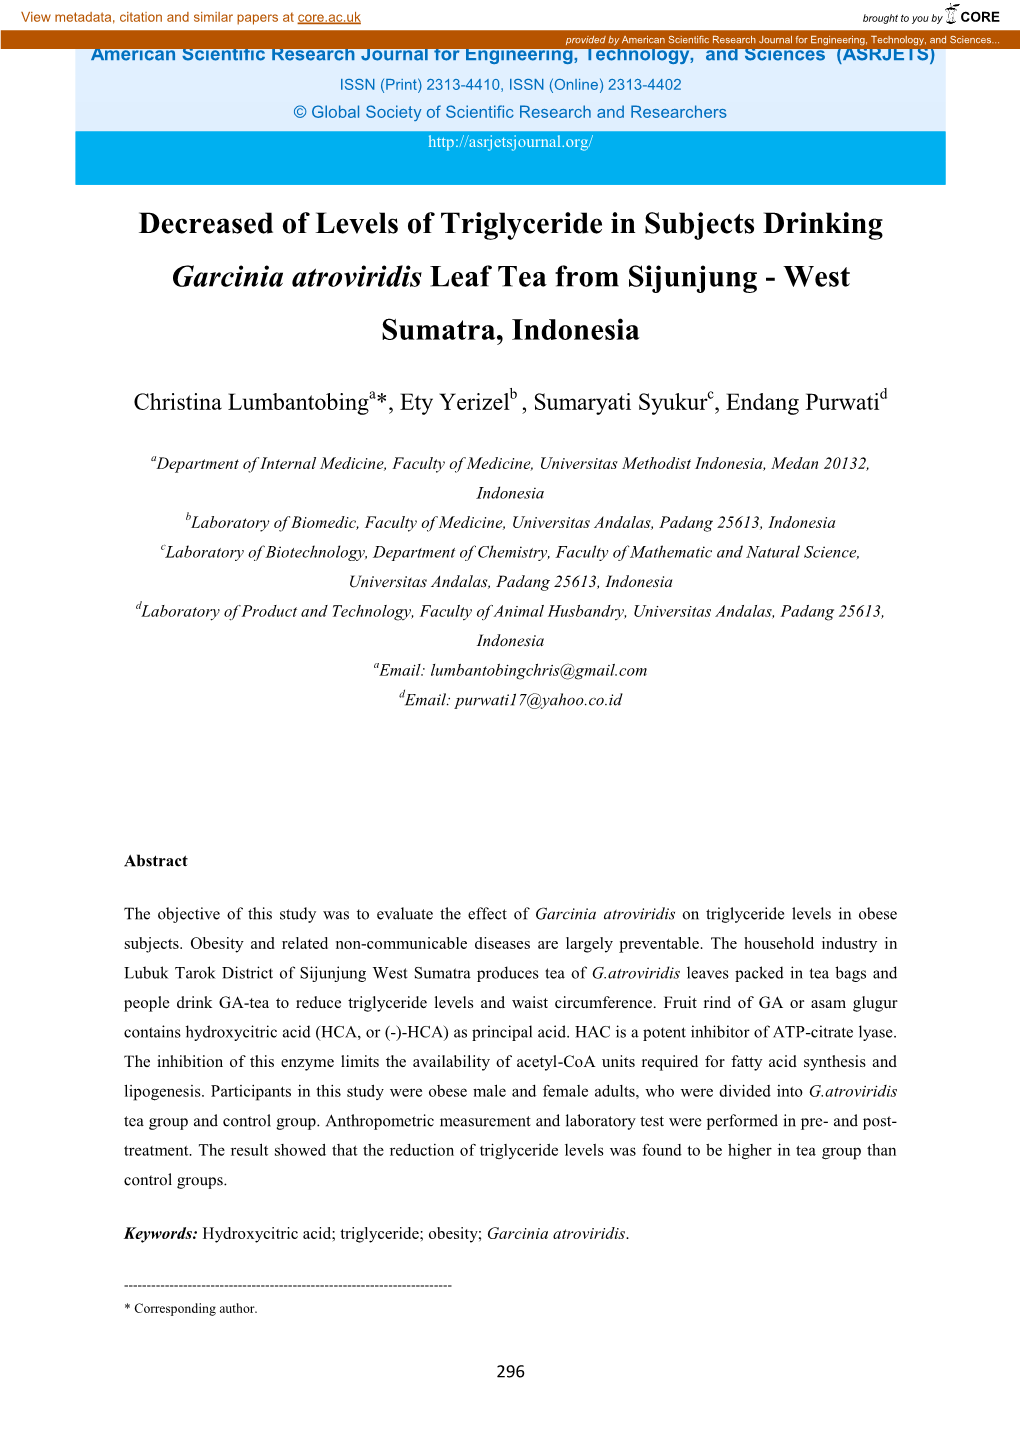 Decreased of Levels of Triglyceride in Subjects Drinking Garcinia Atroviridis Leaf Tea from Sijunjung - West Sumatra, Indonesia